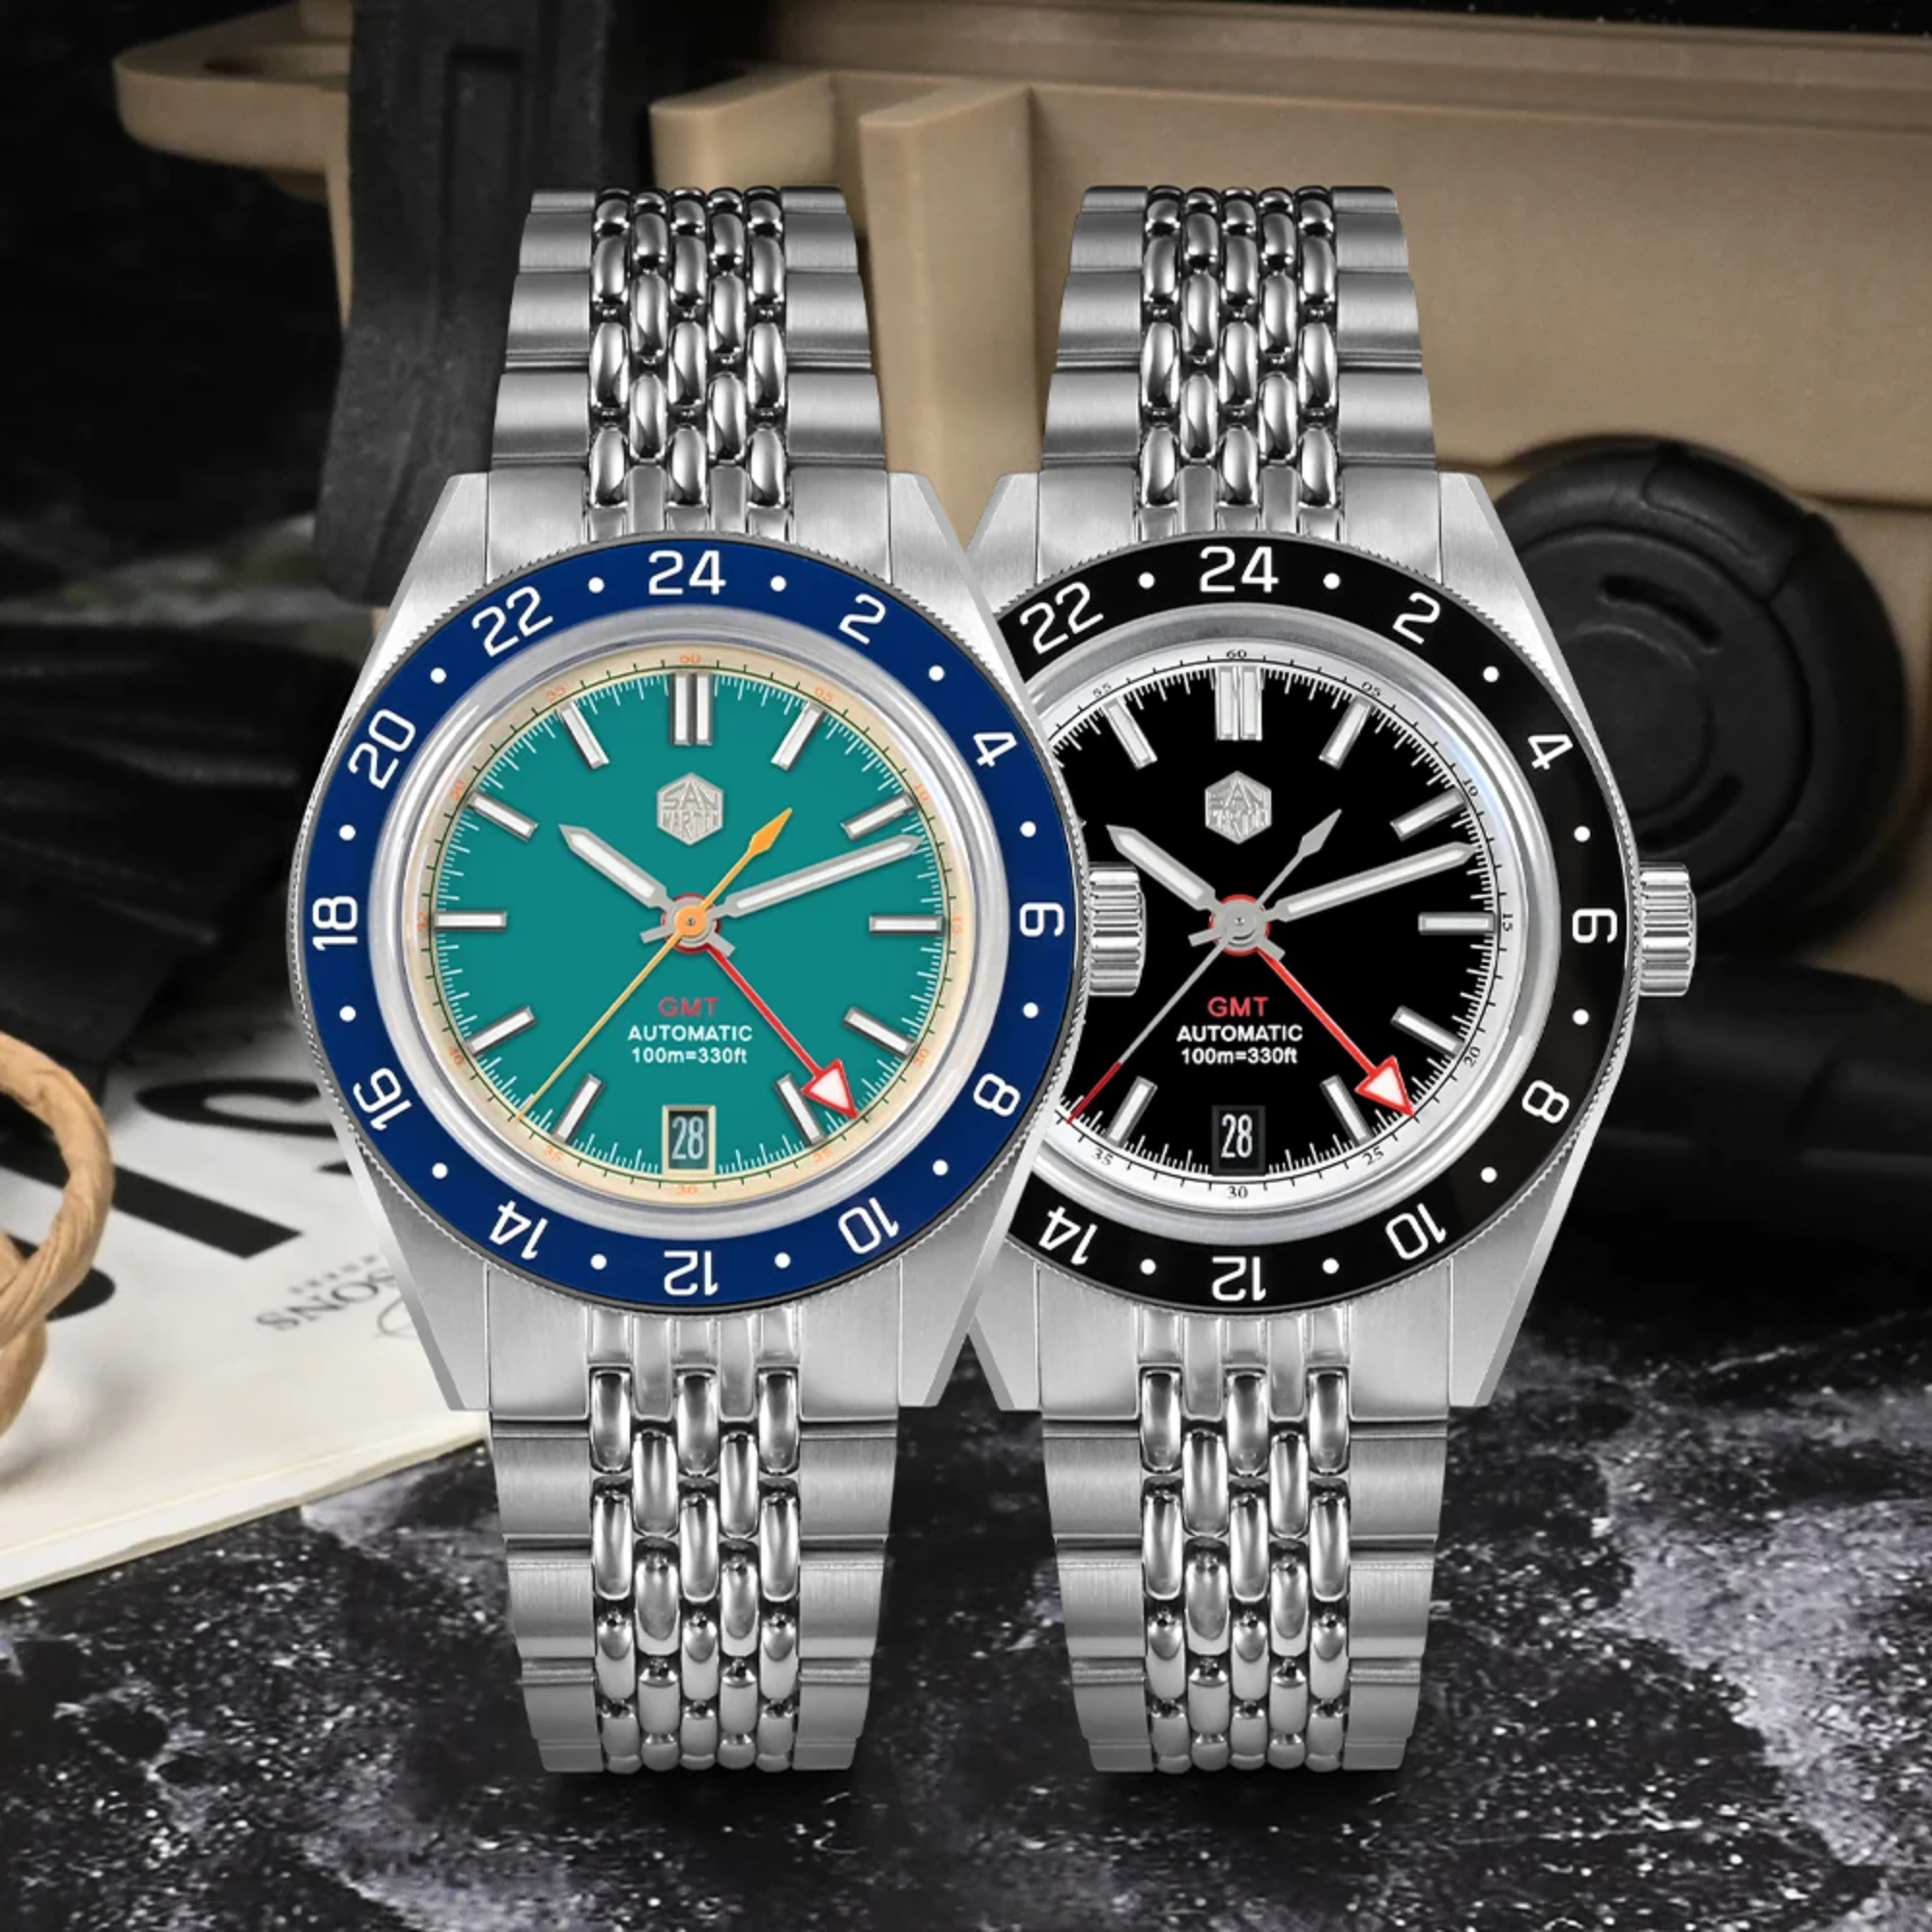 San Martin New Original Design Men Watch 39.5mm GMT SN0116 - Black san martin watches india online